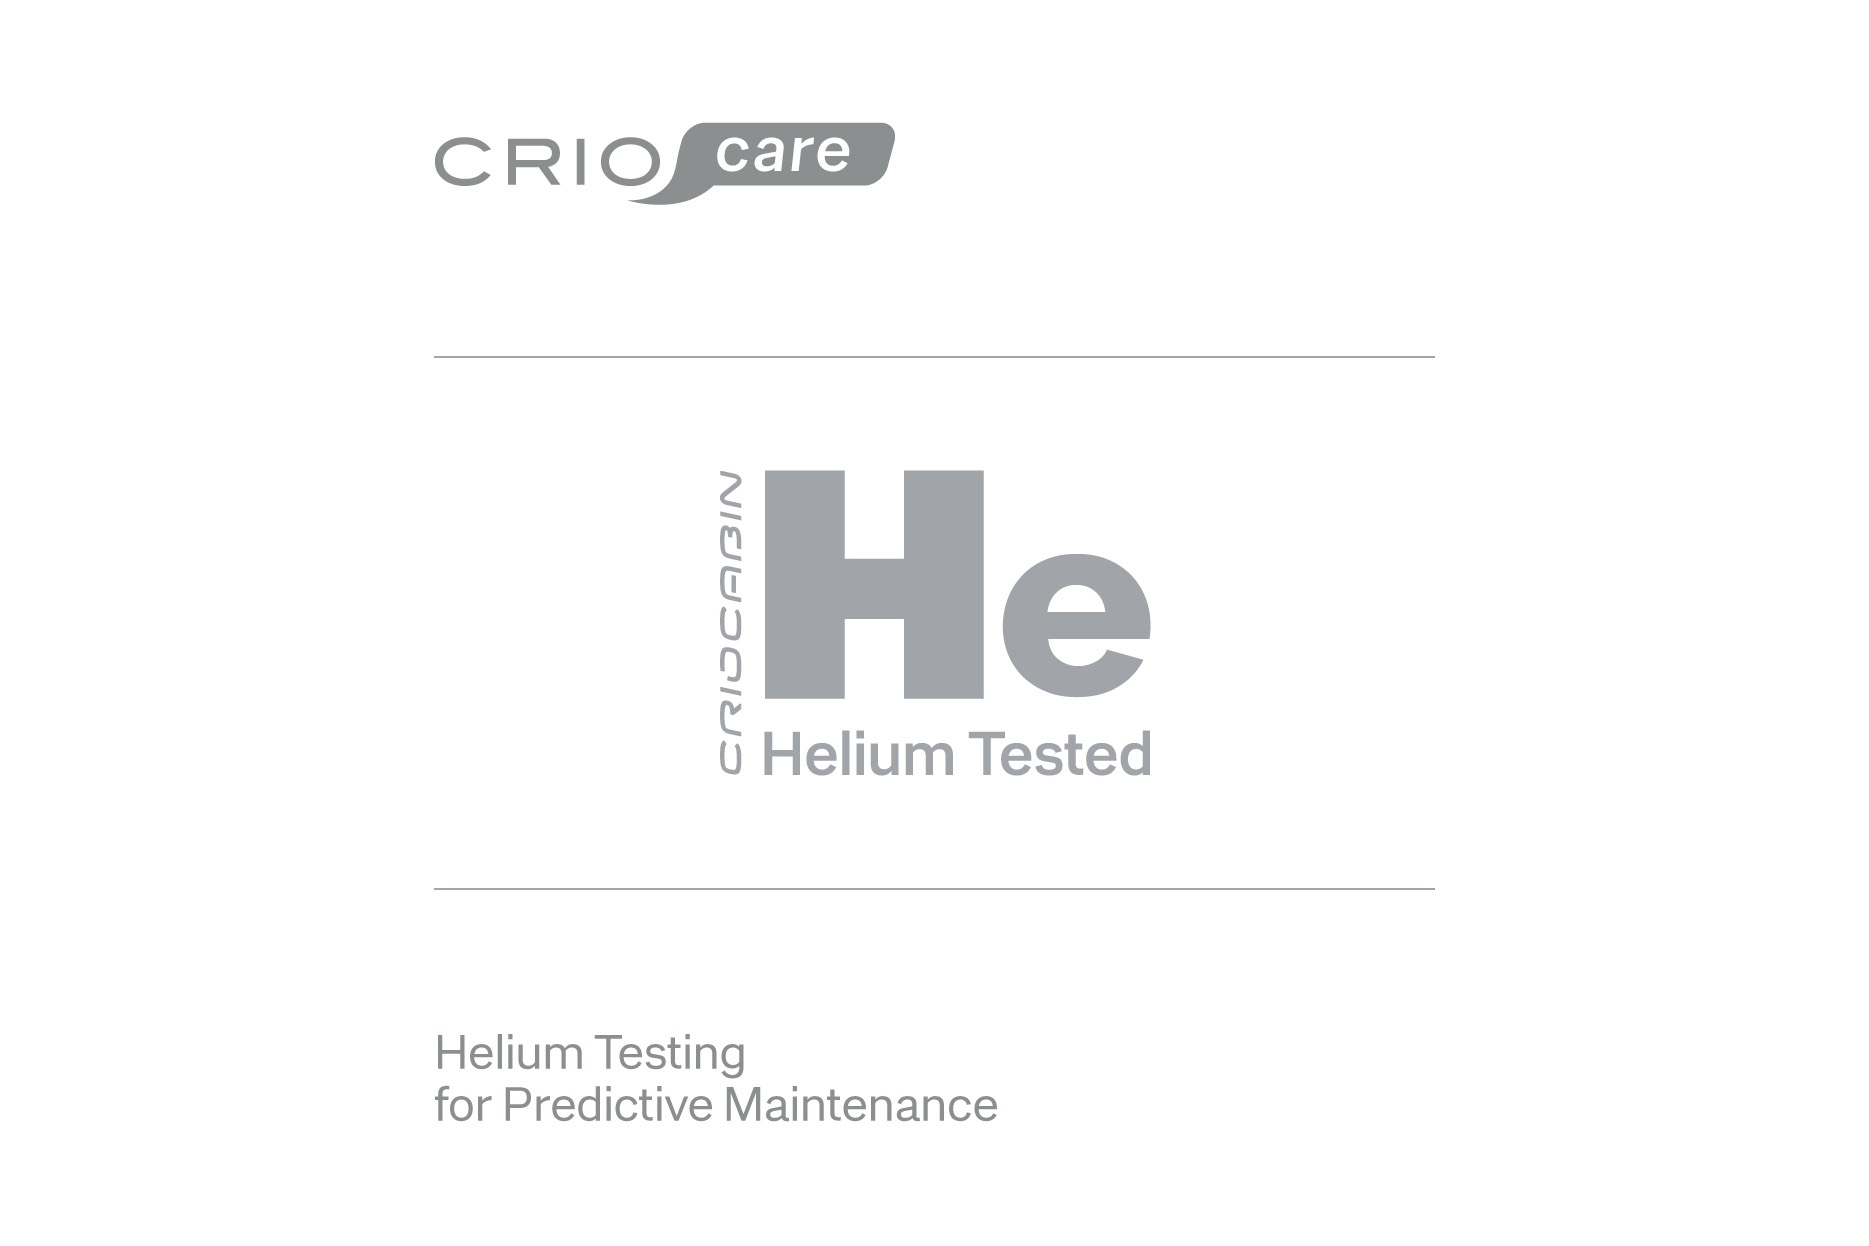 Criocabin Helium Test for Predictive Maintenance